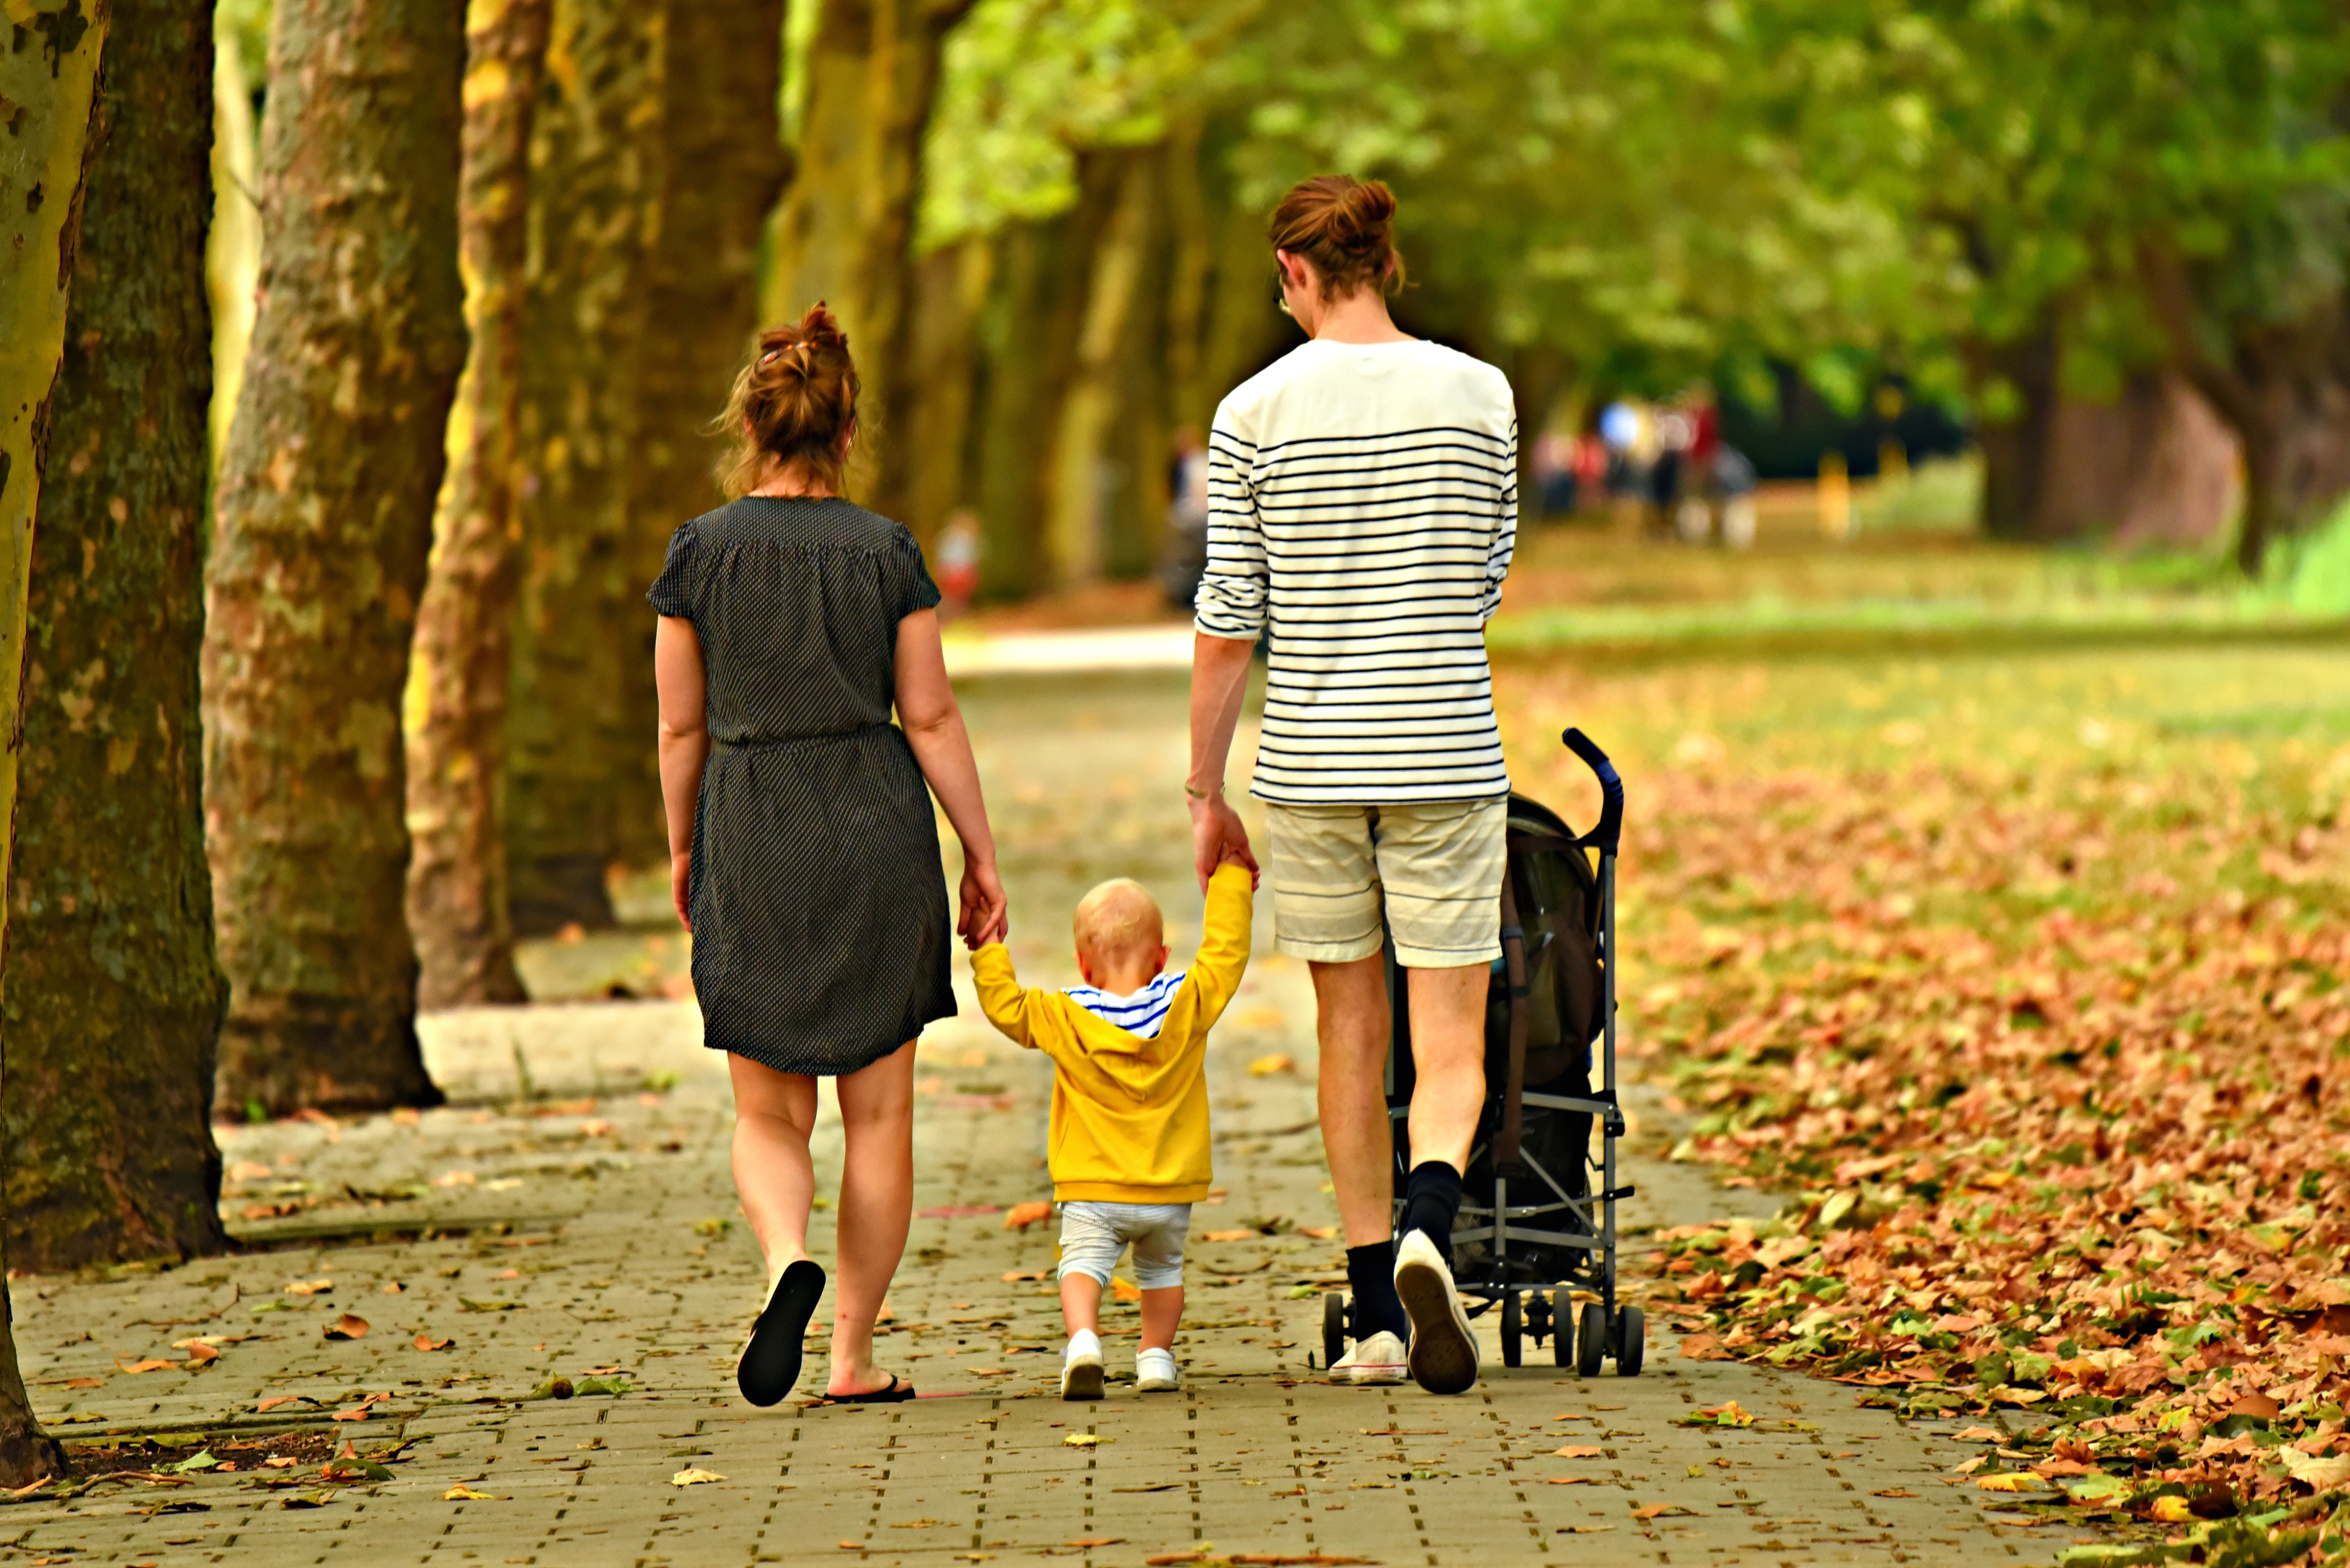 Мама с марусей любят гулять в парке. Семья на прогулке. Прогулка в парке с детьми. Семья гуляет в парке. Семья на прогулке в парке.